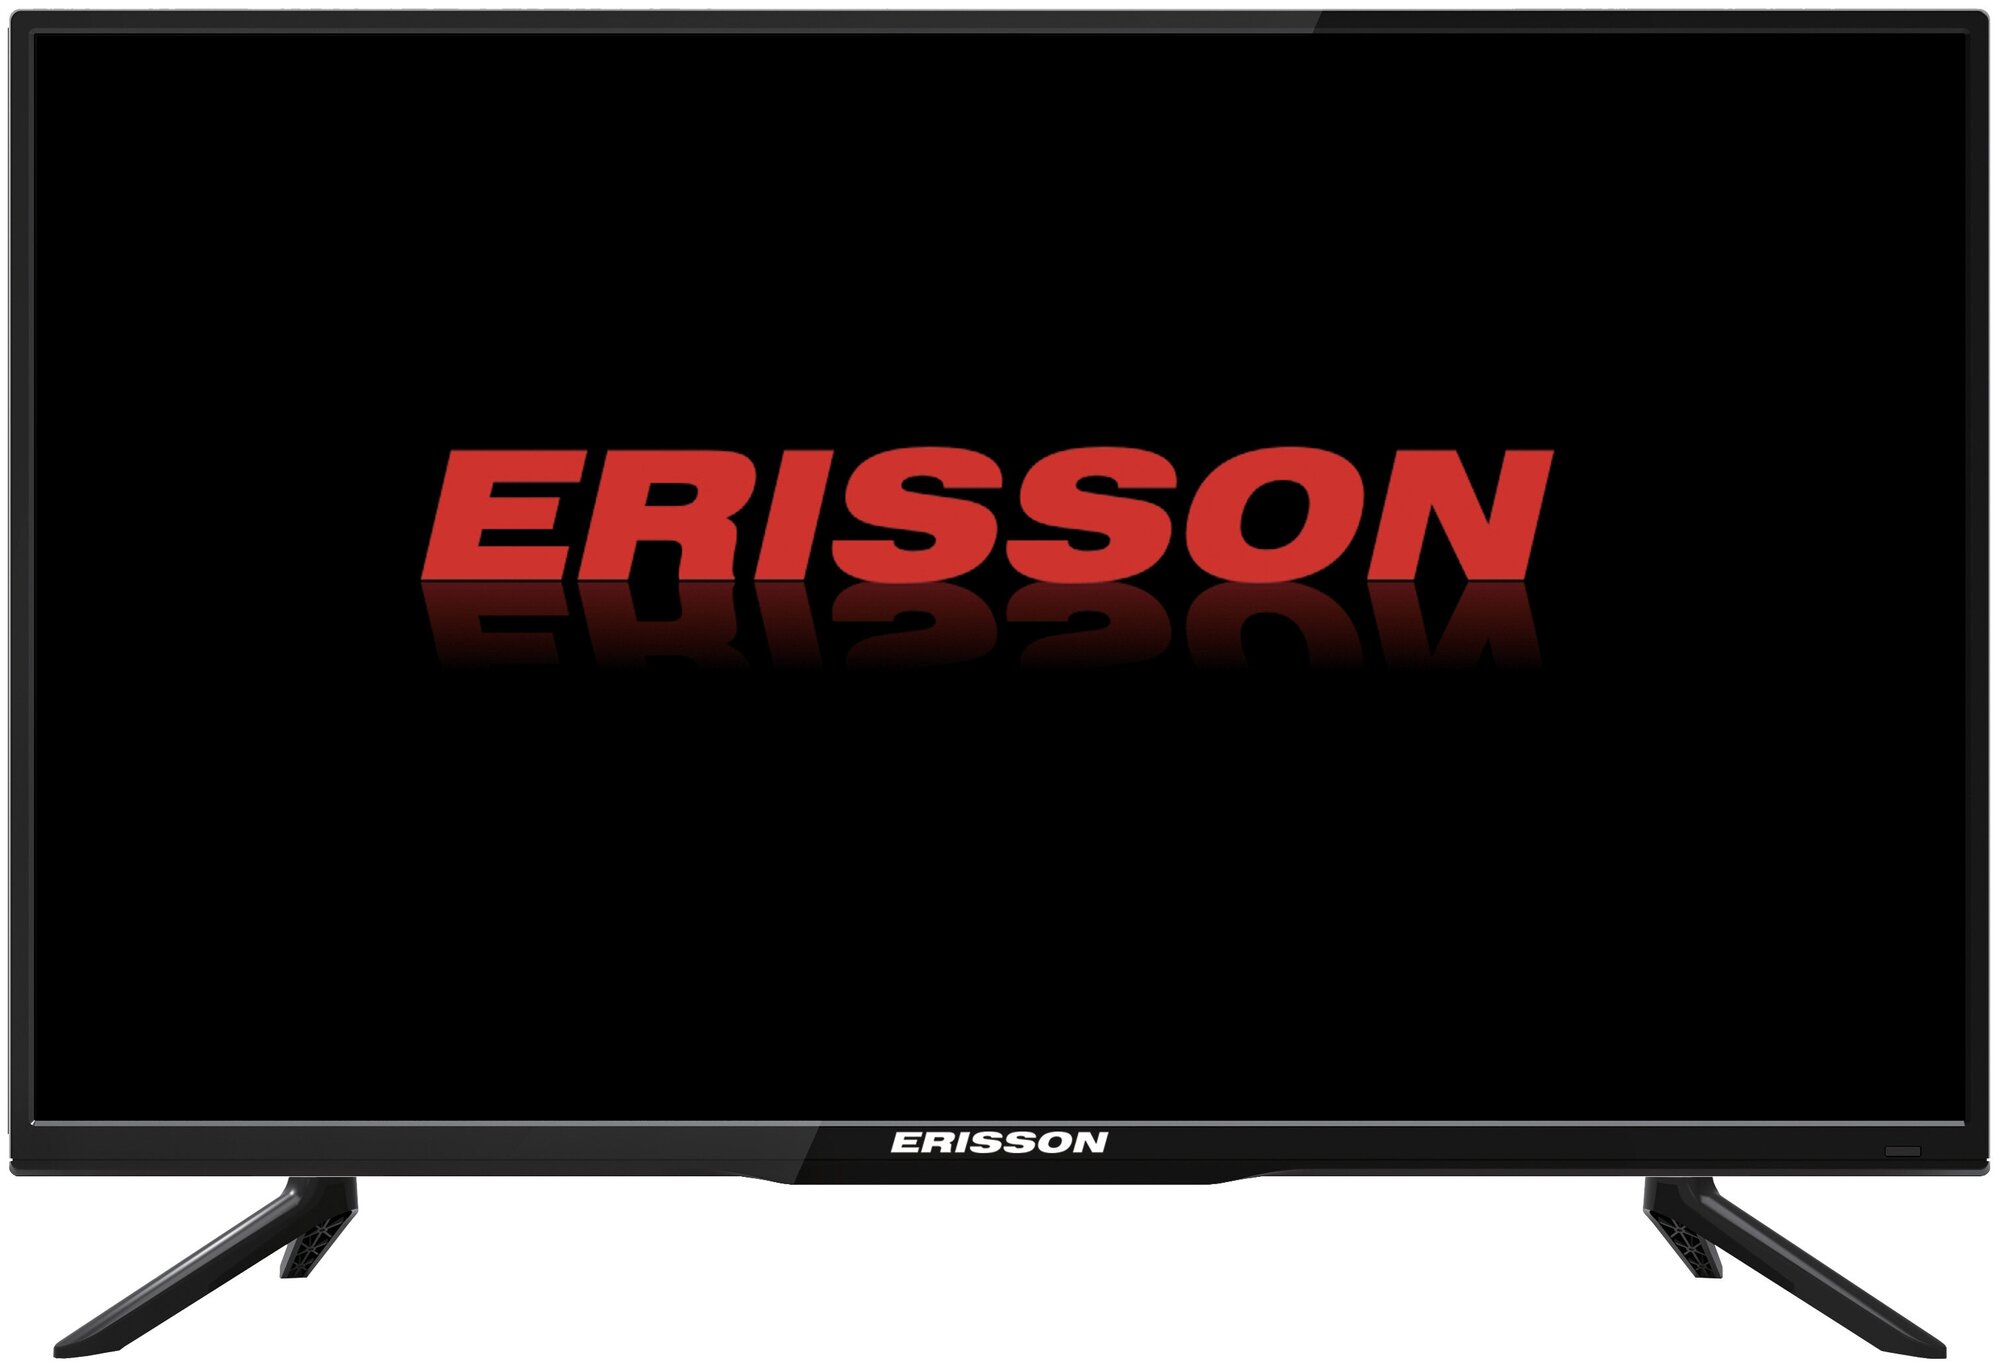 LCD(ЖК) телевизор Erisson 24HLE20T2